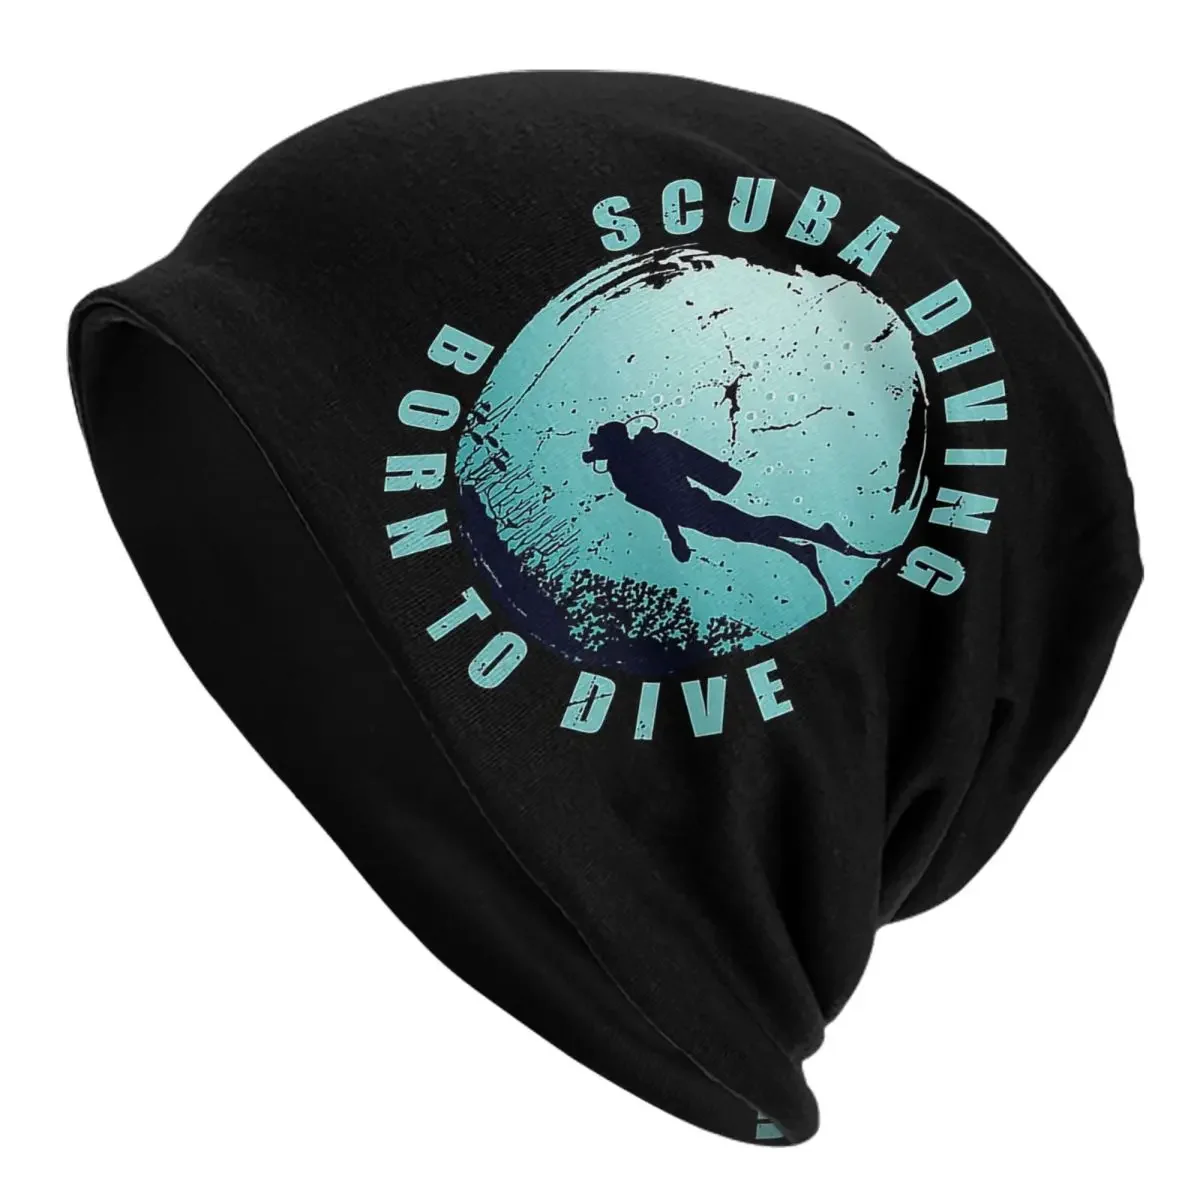 

Scuba Diving Born To Dive Warm Knitted Cap Hip Hop Bonnet Hat Autumn Winter Outdoor Beanies Hats for Men Women Adult